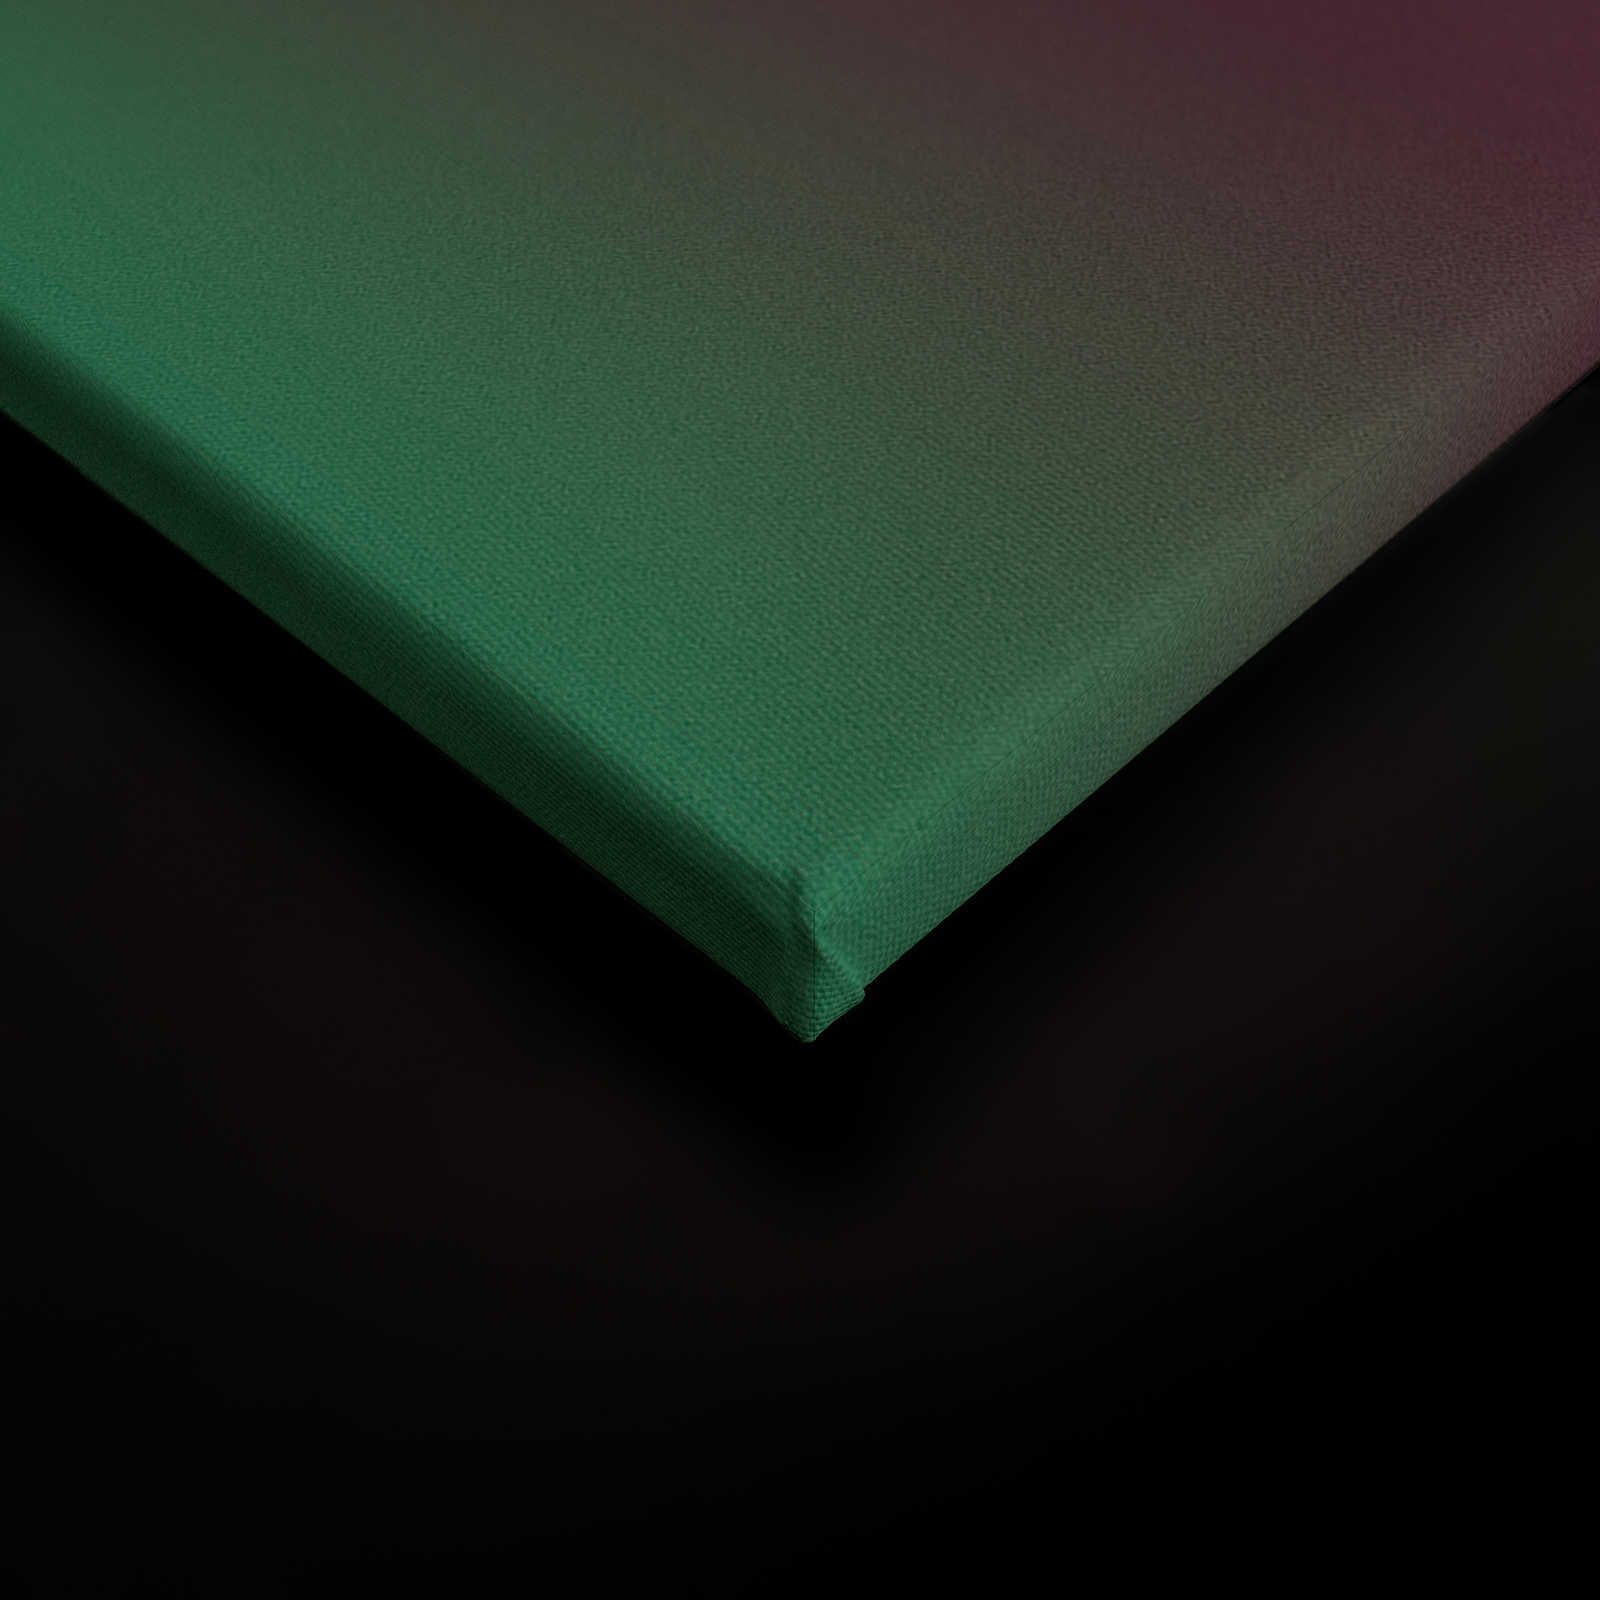             Over the Rainbow 2 - Farbverlauf Leinwandbild buntes Streifendesign – 0,90 m x 0,60 m
        